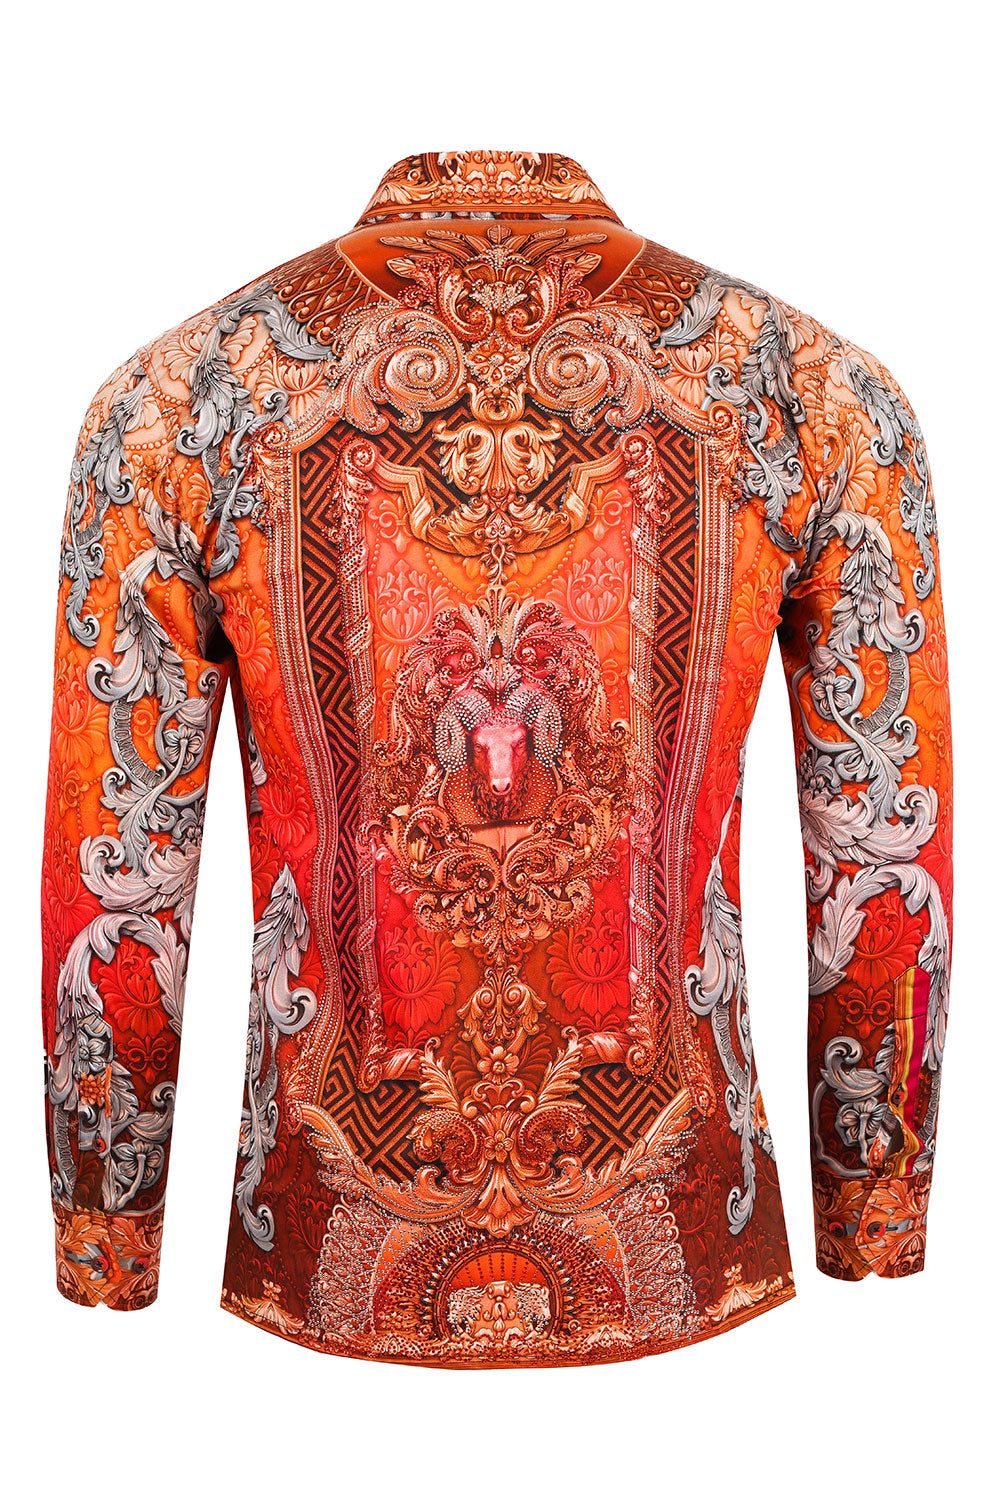 BARABAS Men's Rhinestone Baroque Animal Print Long Sleeve Shirts 3SPR402 Coral